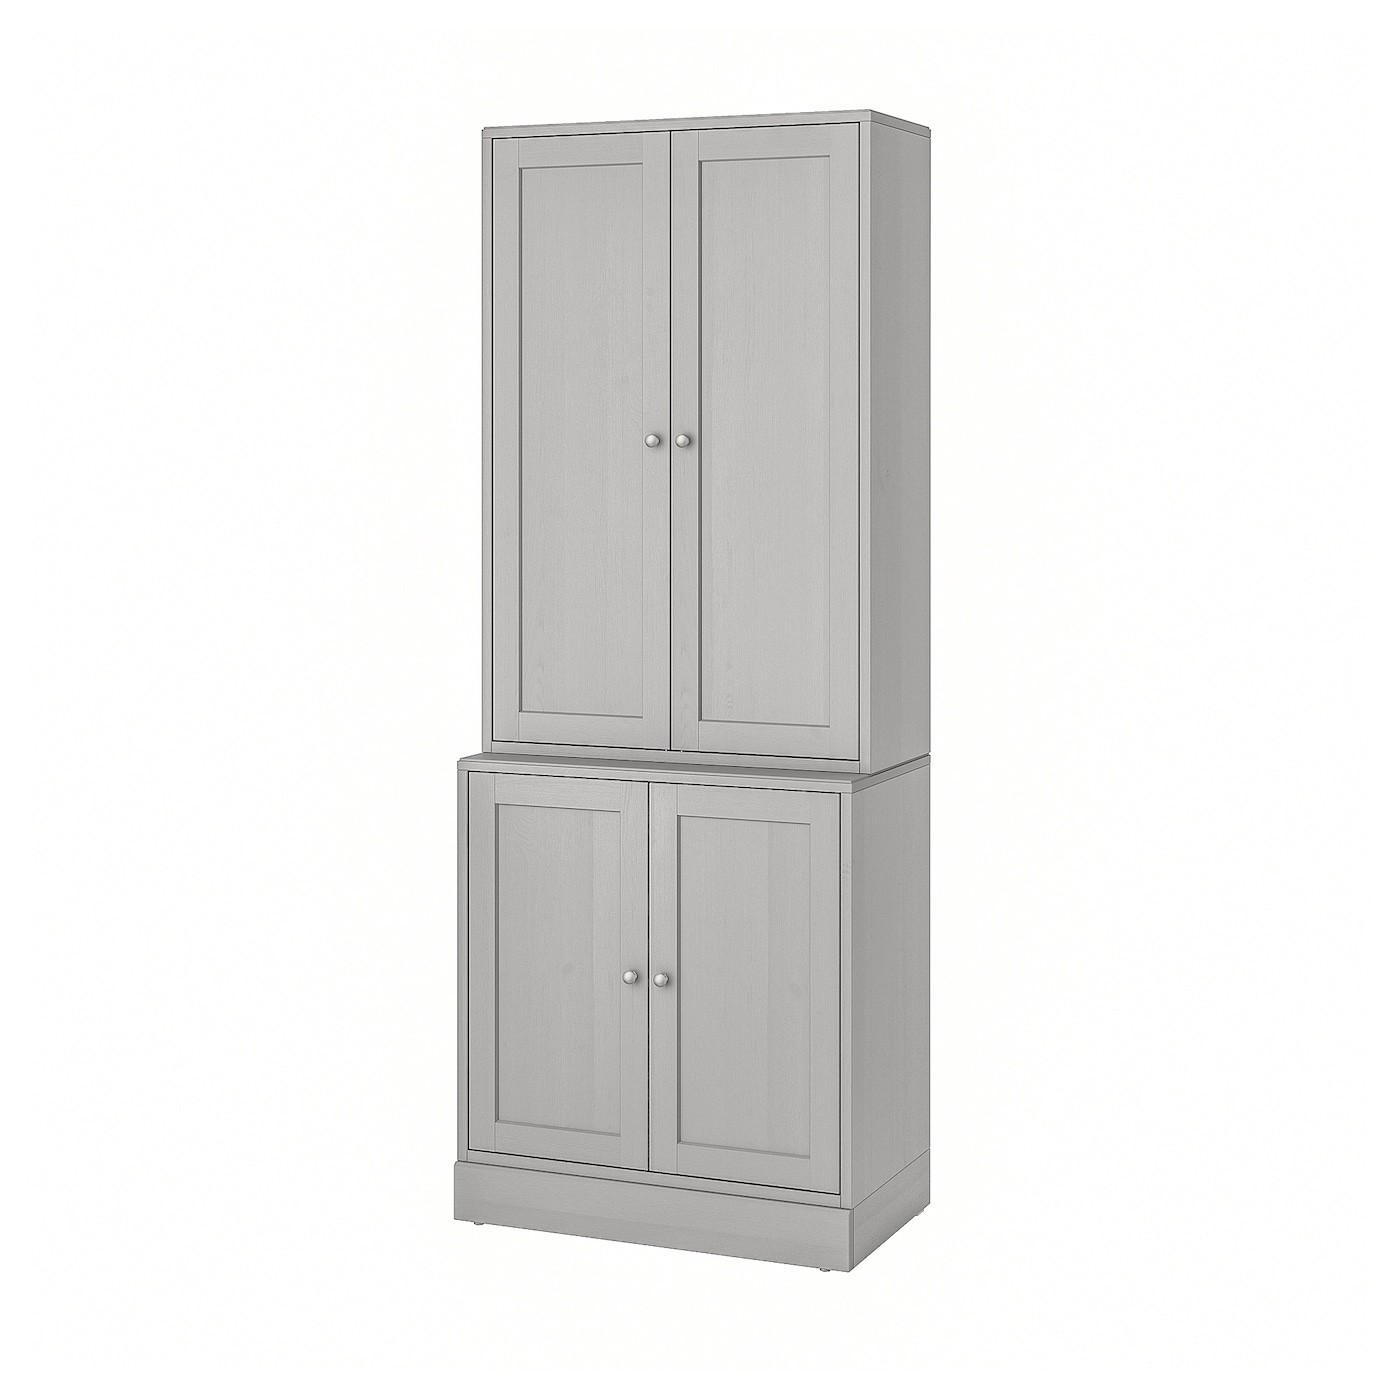 IKEA HAVSTA ХАВСТА Комбинация для хранения с дверцами, серый, 81x47x212 cм 99265987 992.659.87